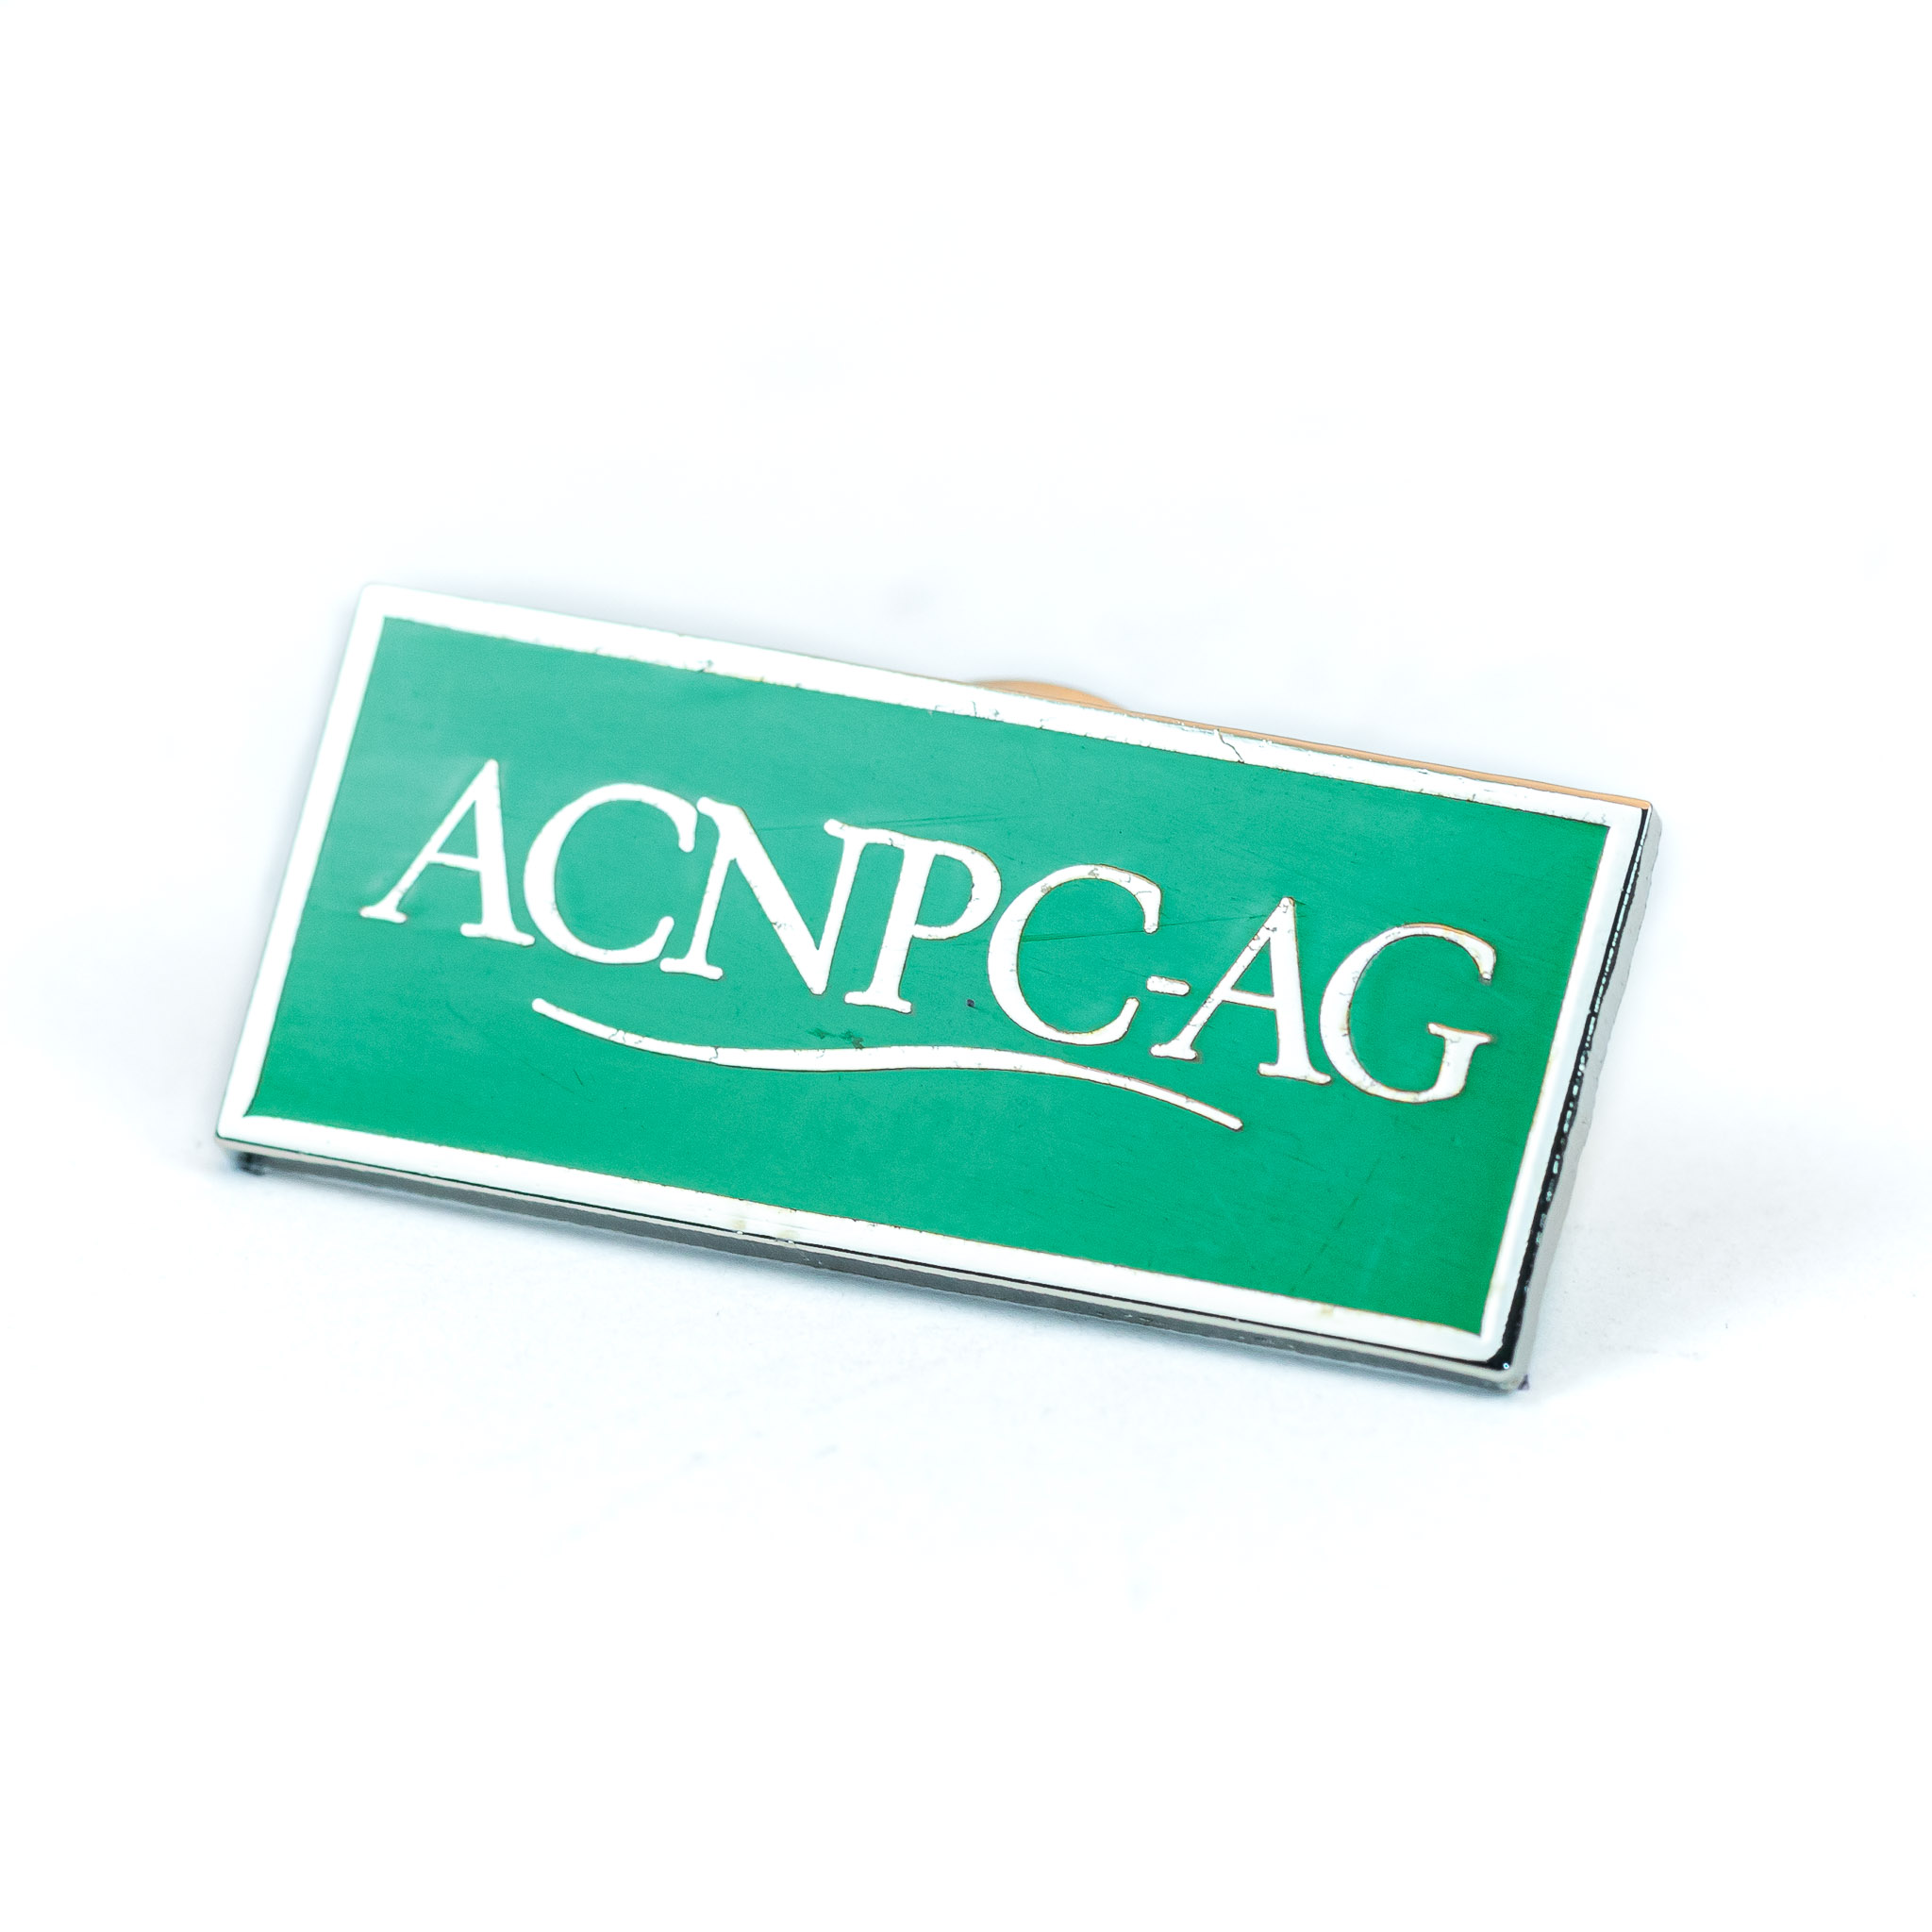 ACNPC-AG Lapel Pin